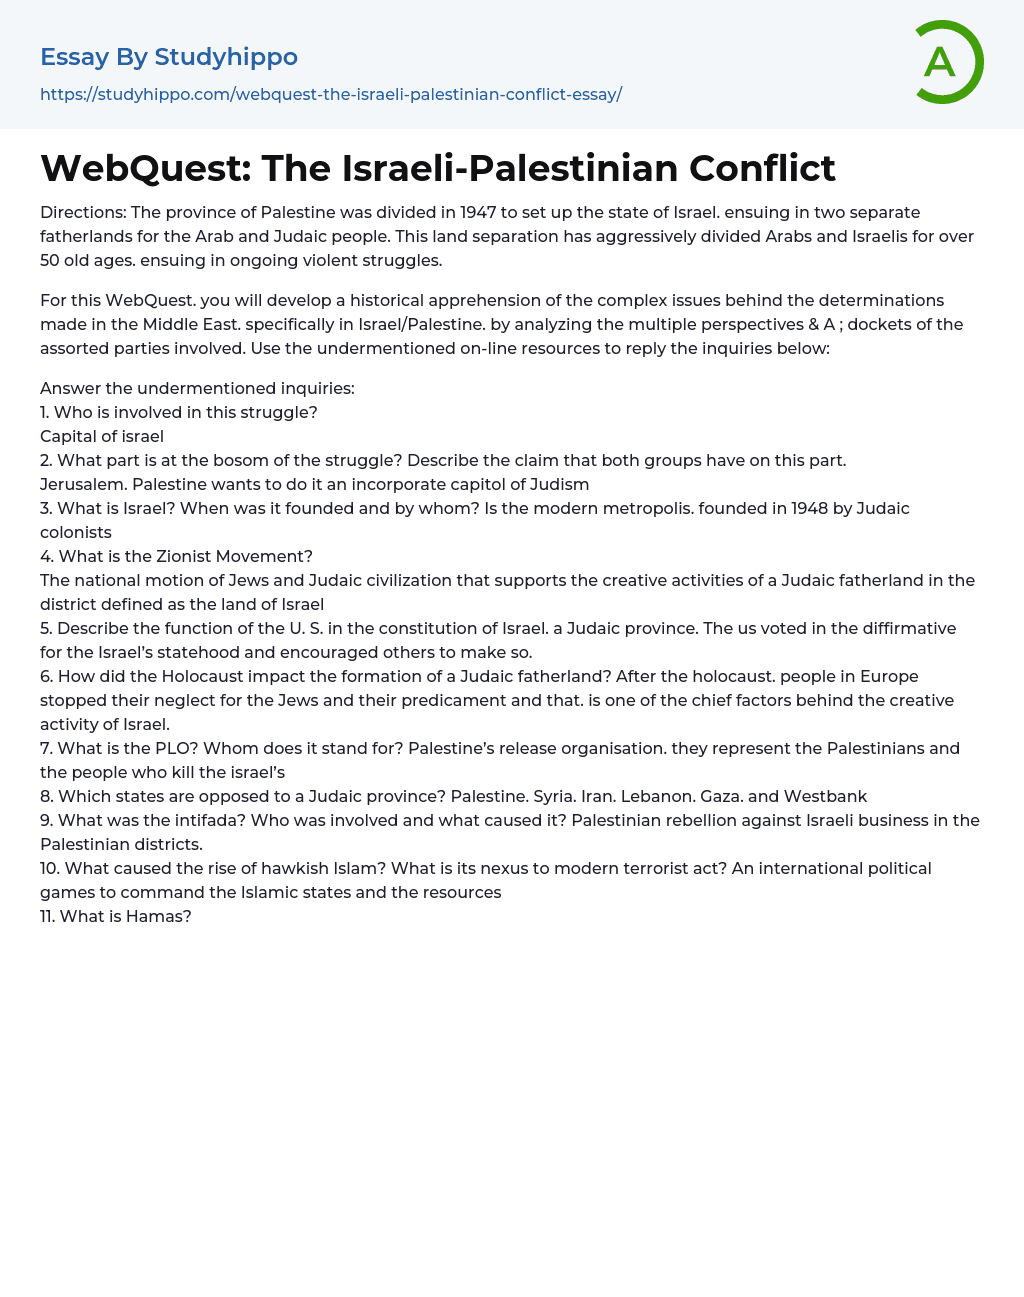 WebQuest: The Israeli-Palestinian Conflict Essay Example